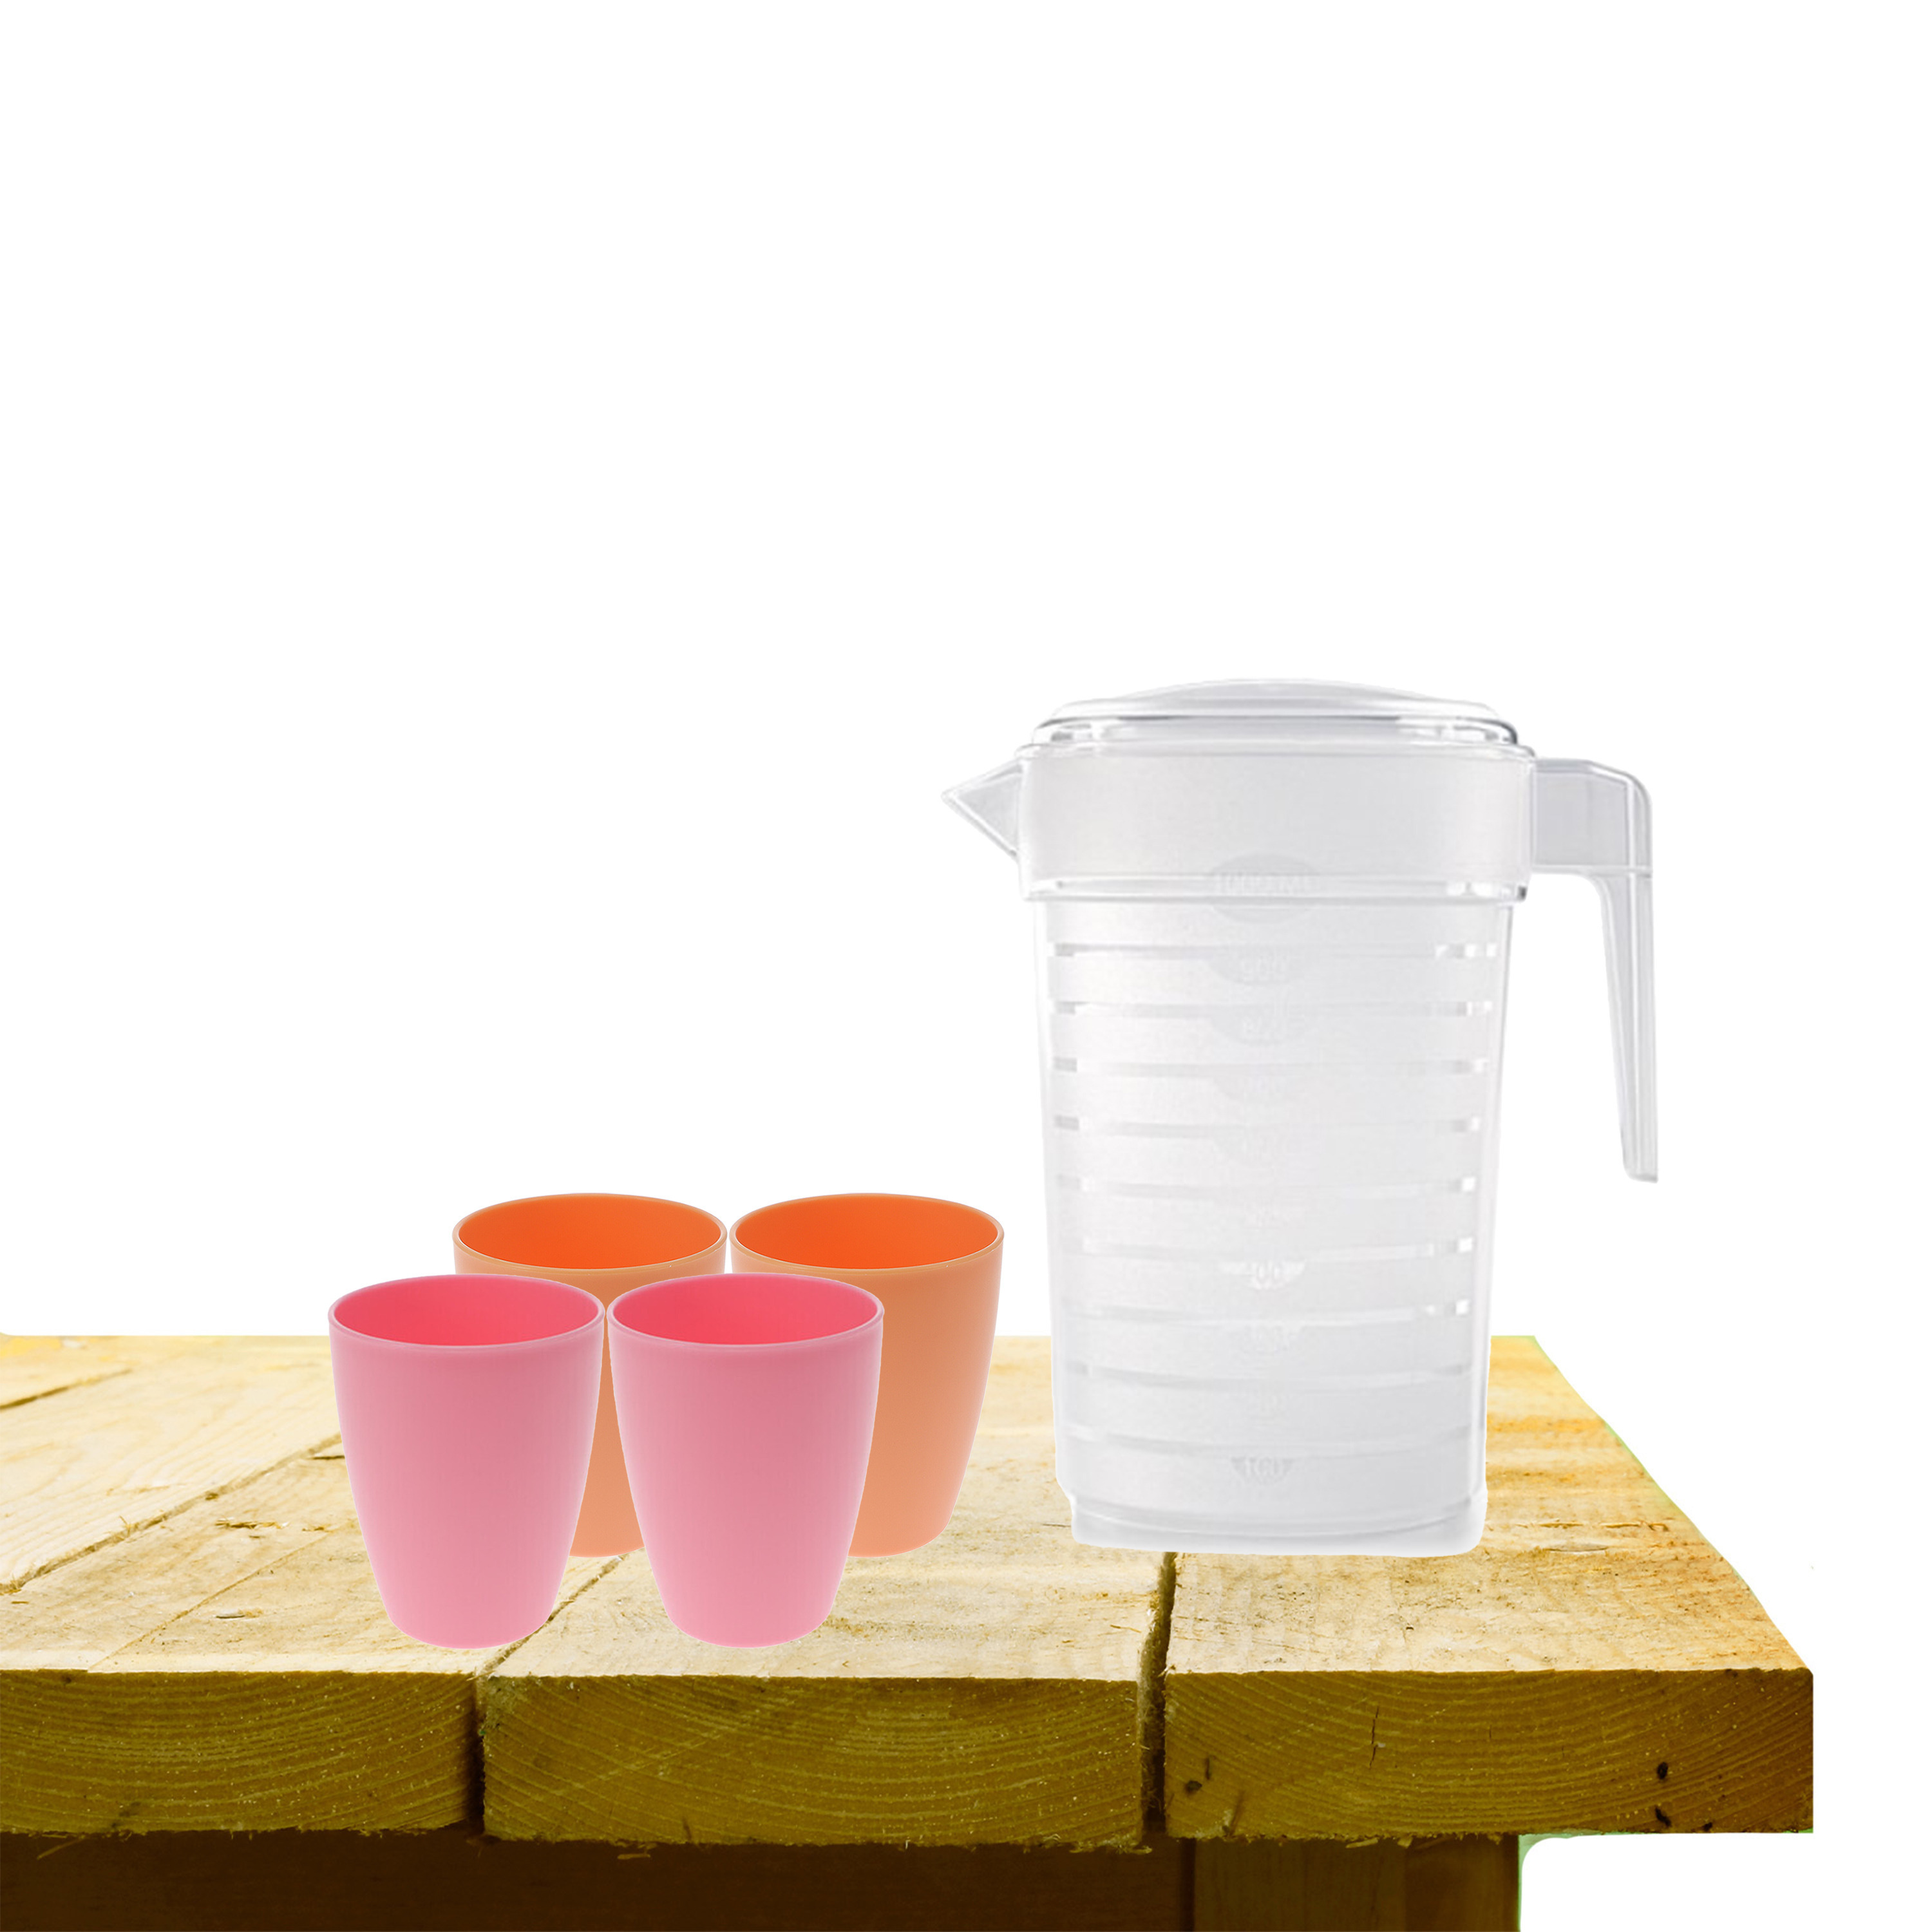 Set van 1x waterkan 1 liter met drinkbekers 2x roze en 2x oranje